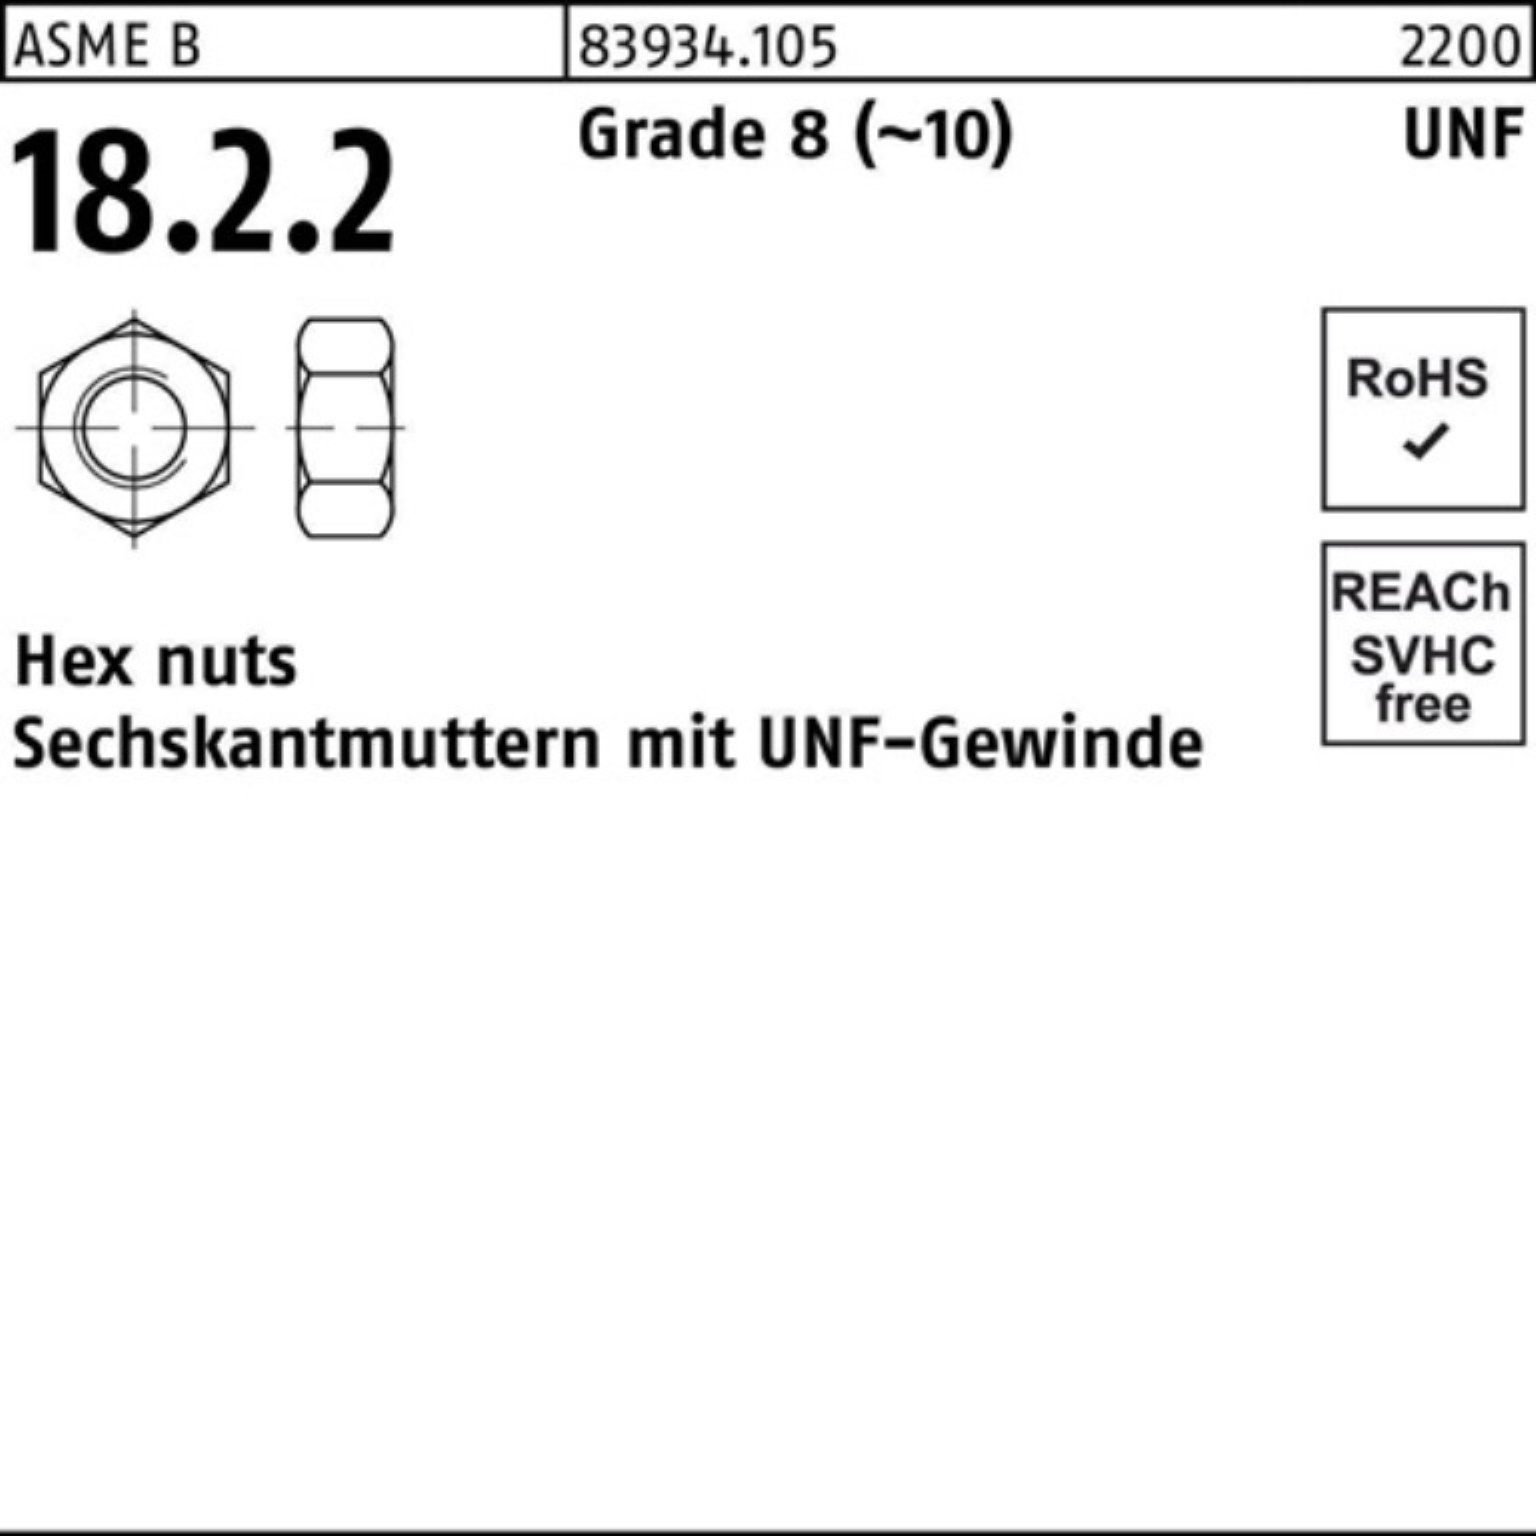 (10) Sechskantmutter 8 100er Grade 83934 100 UNF-Gewinde Muttern S 1/4 Reyher R Pack